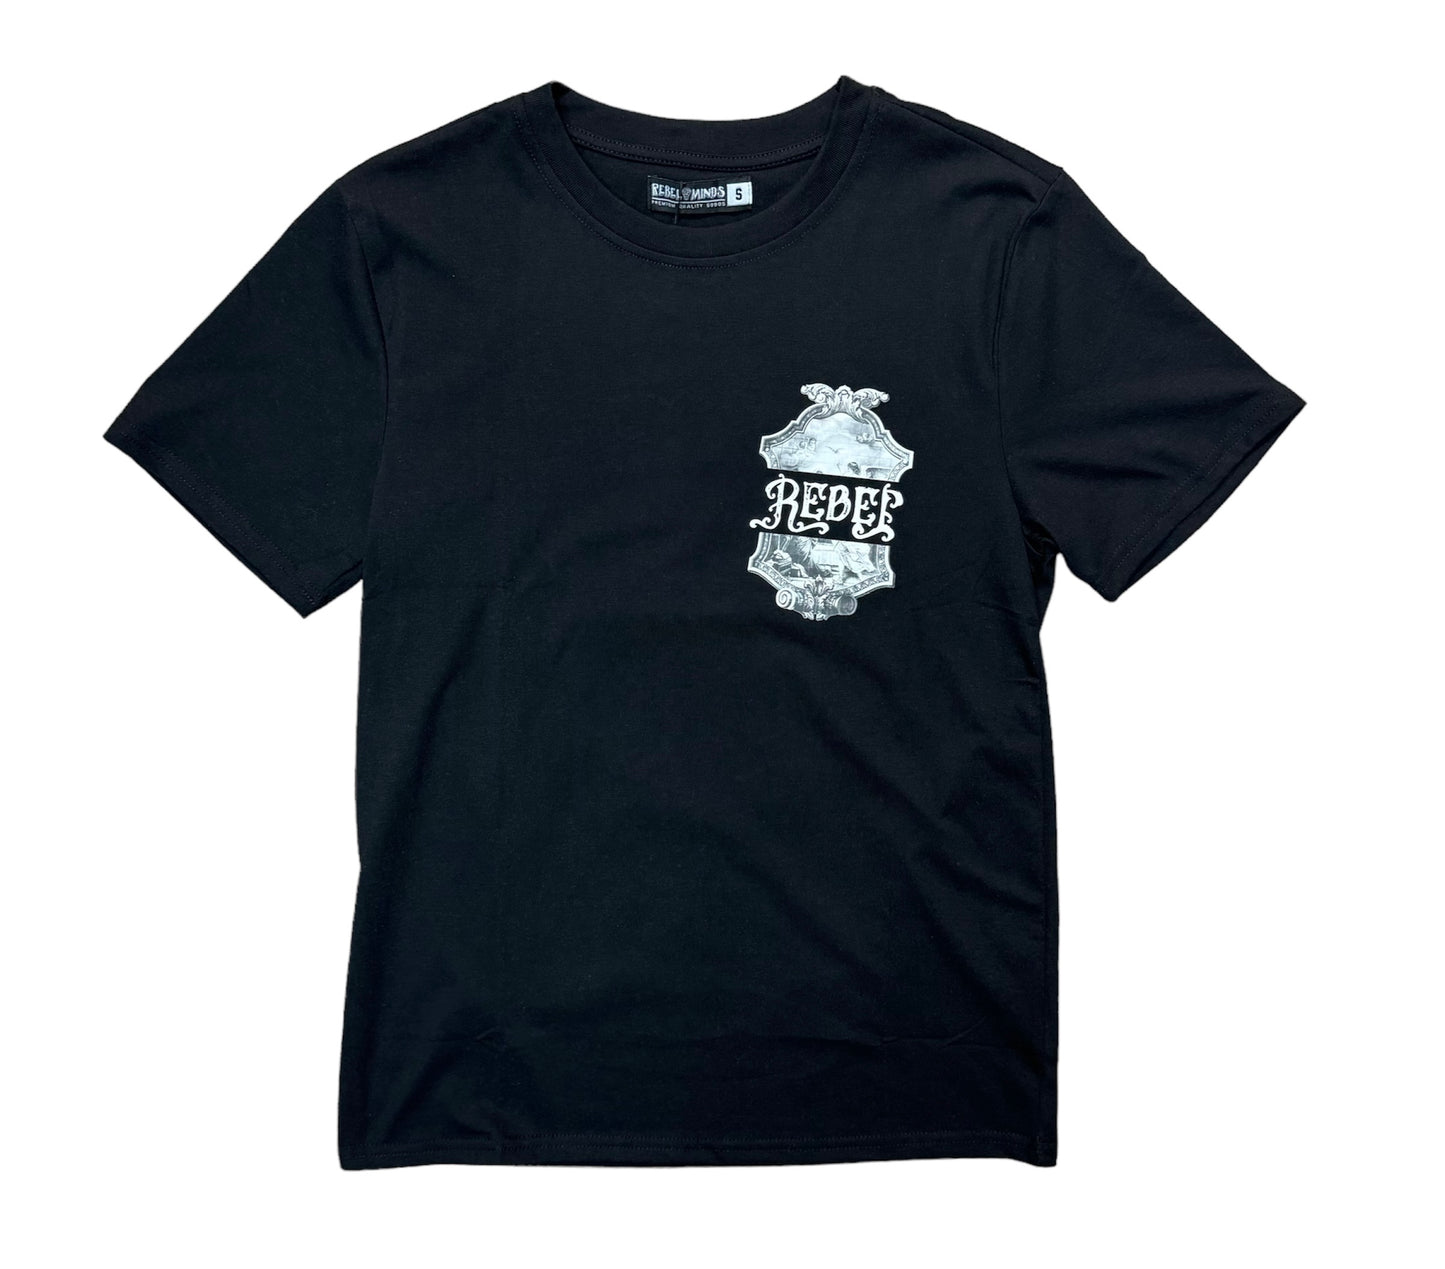 Rebel Minds Blessed Graphic Black T-Shirt